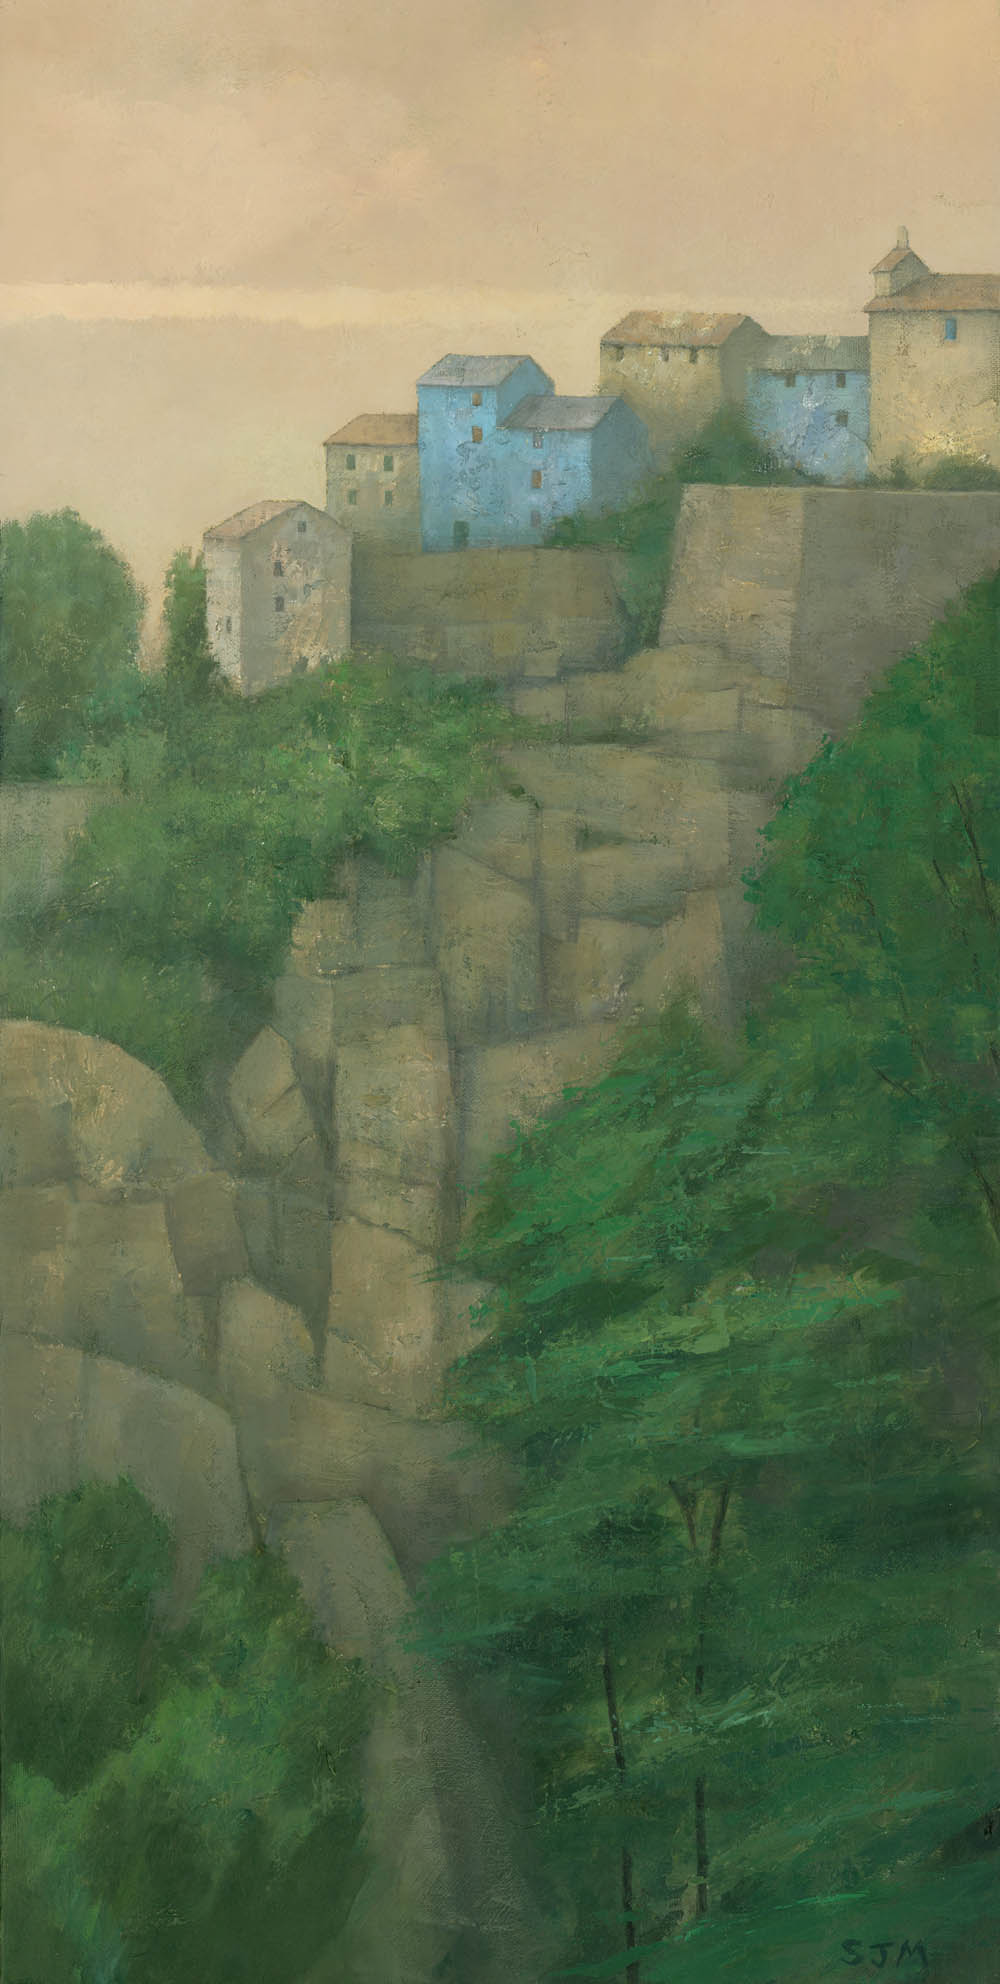 Corsican hilltop village, a landscape painting by artist Stephen Mitchell